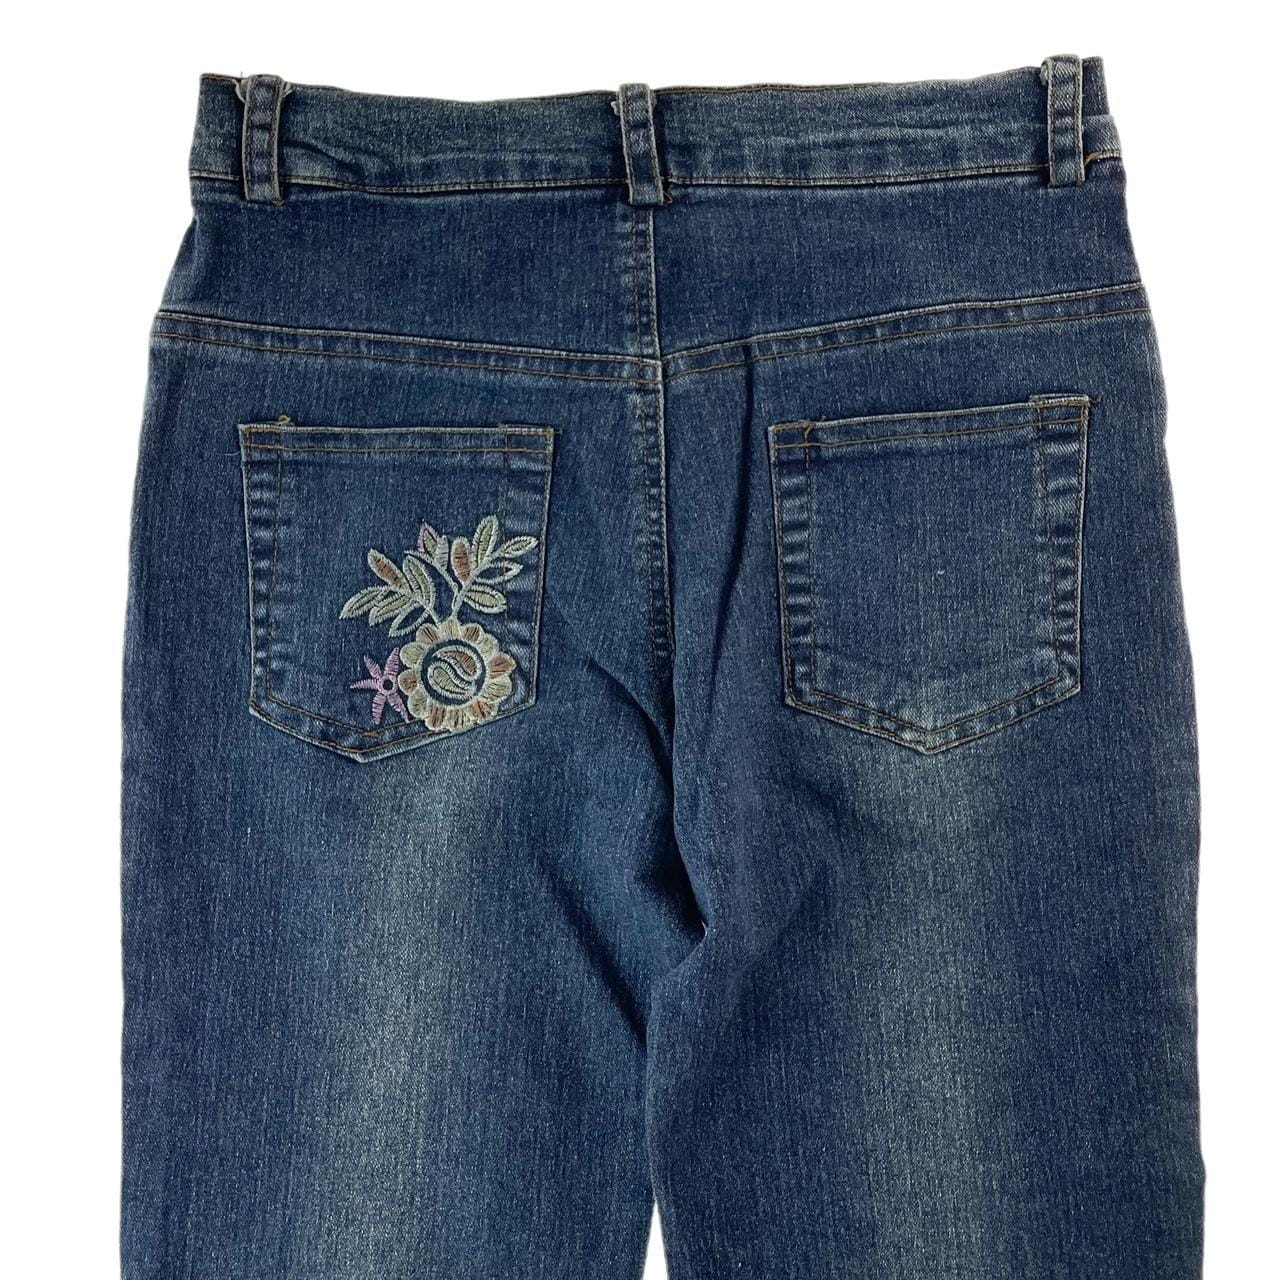 Vintage Flower Japanese denim jeans trousers W26 - second wave 